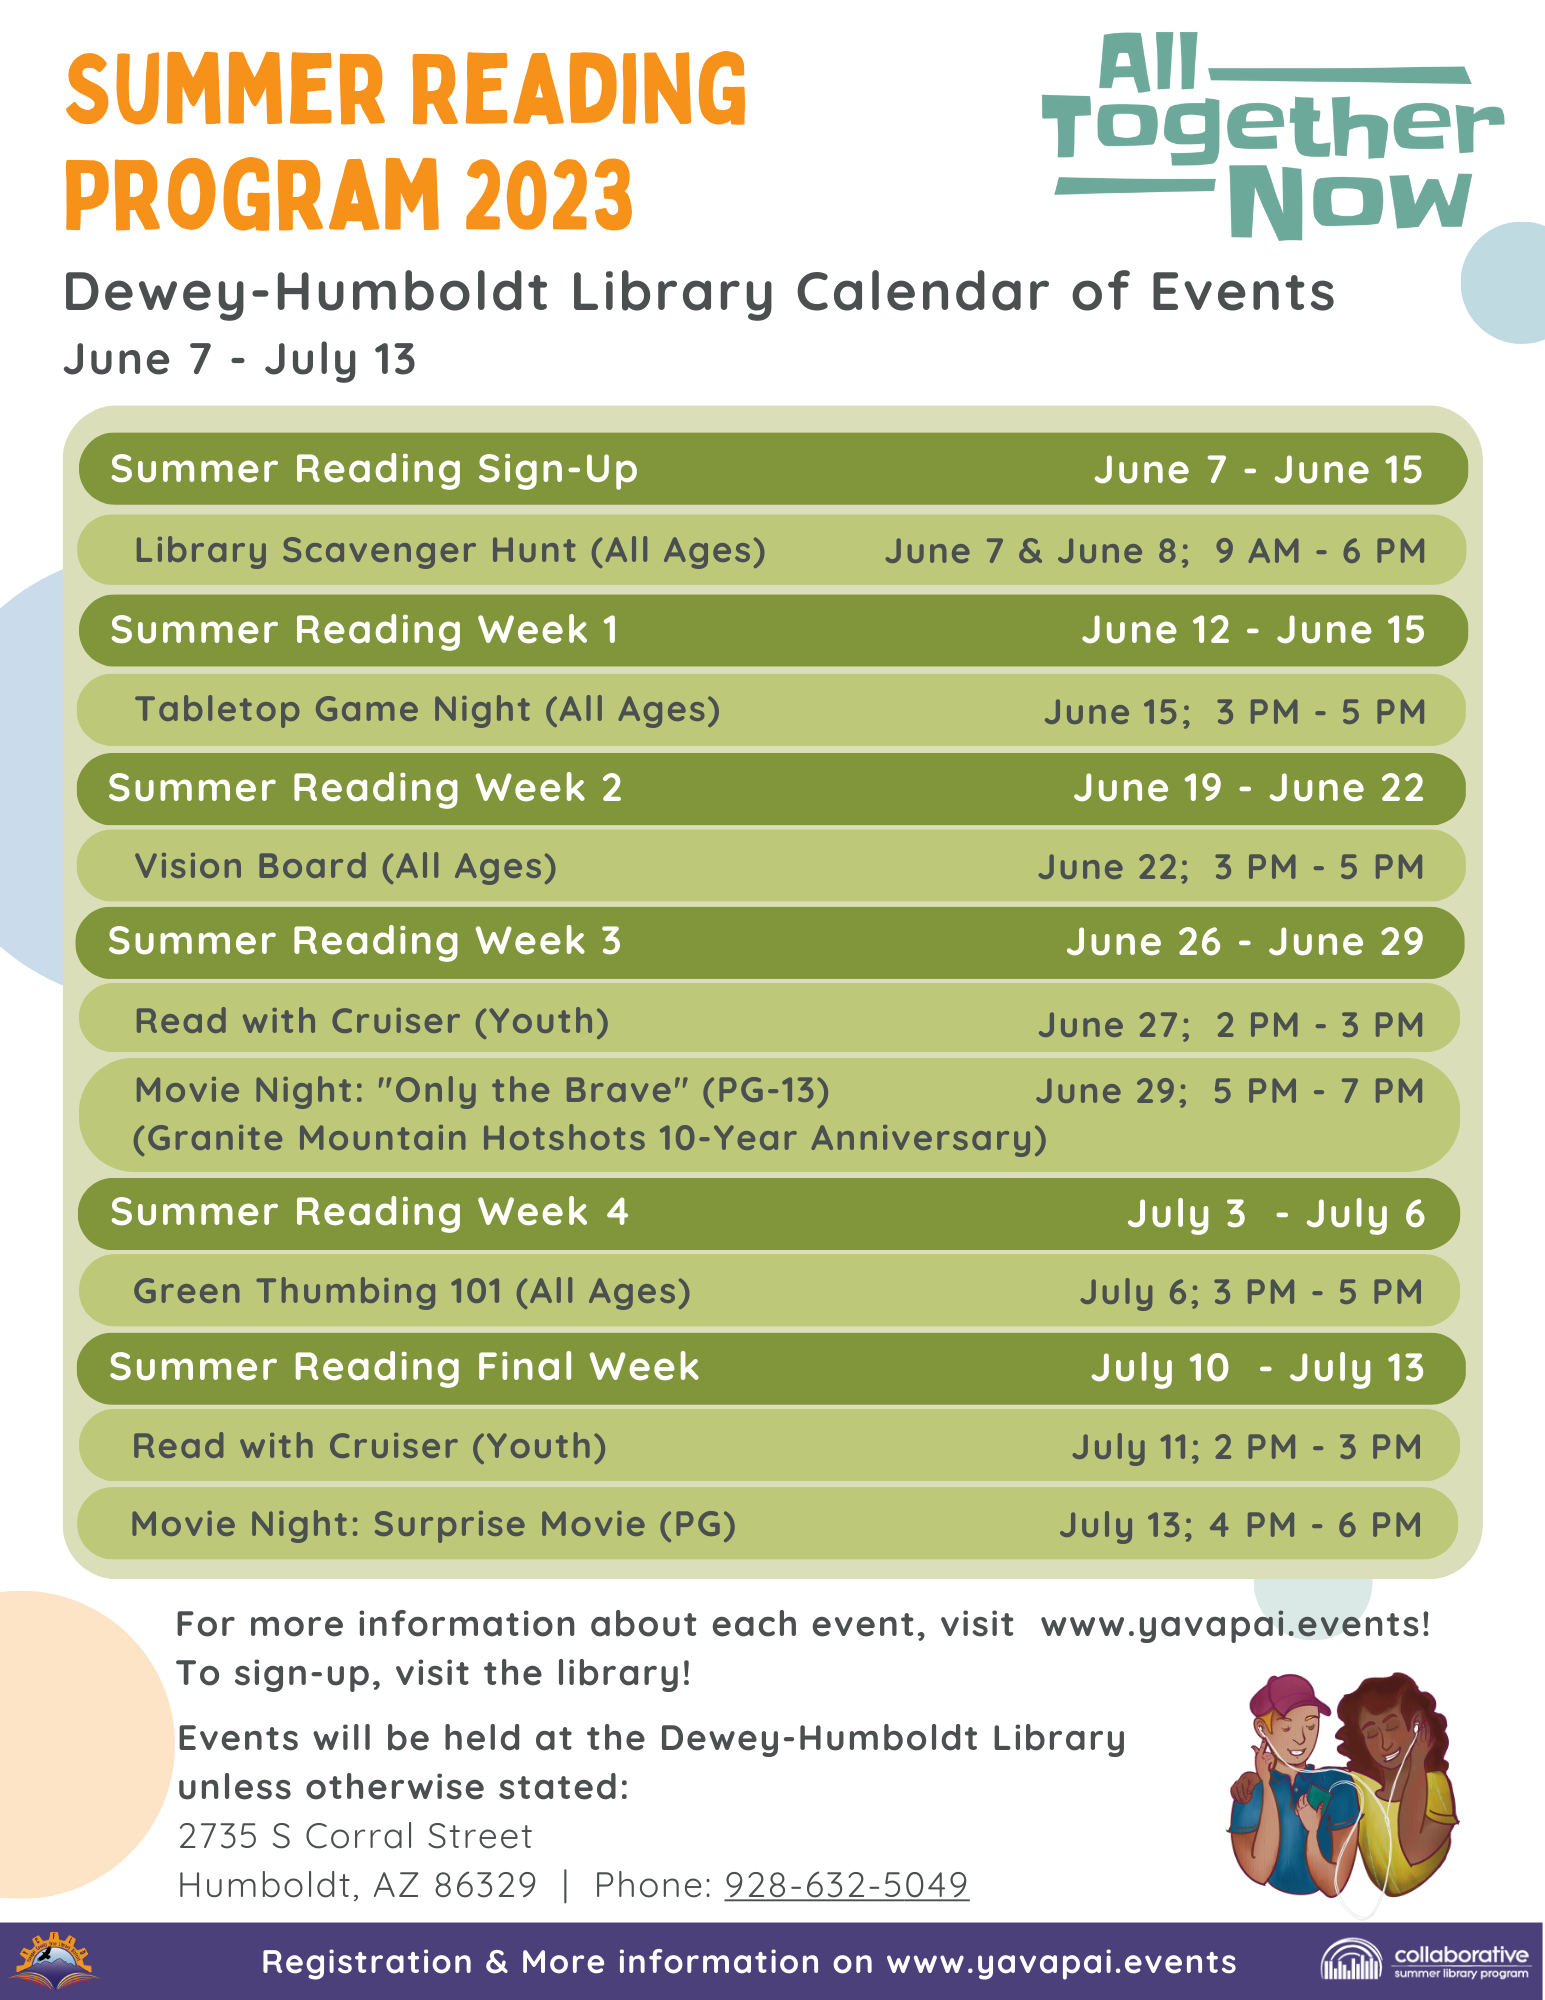 Summer Reading Program Flyer at Dewey-Humboldt Library